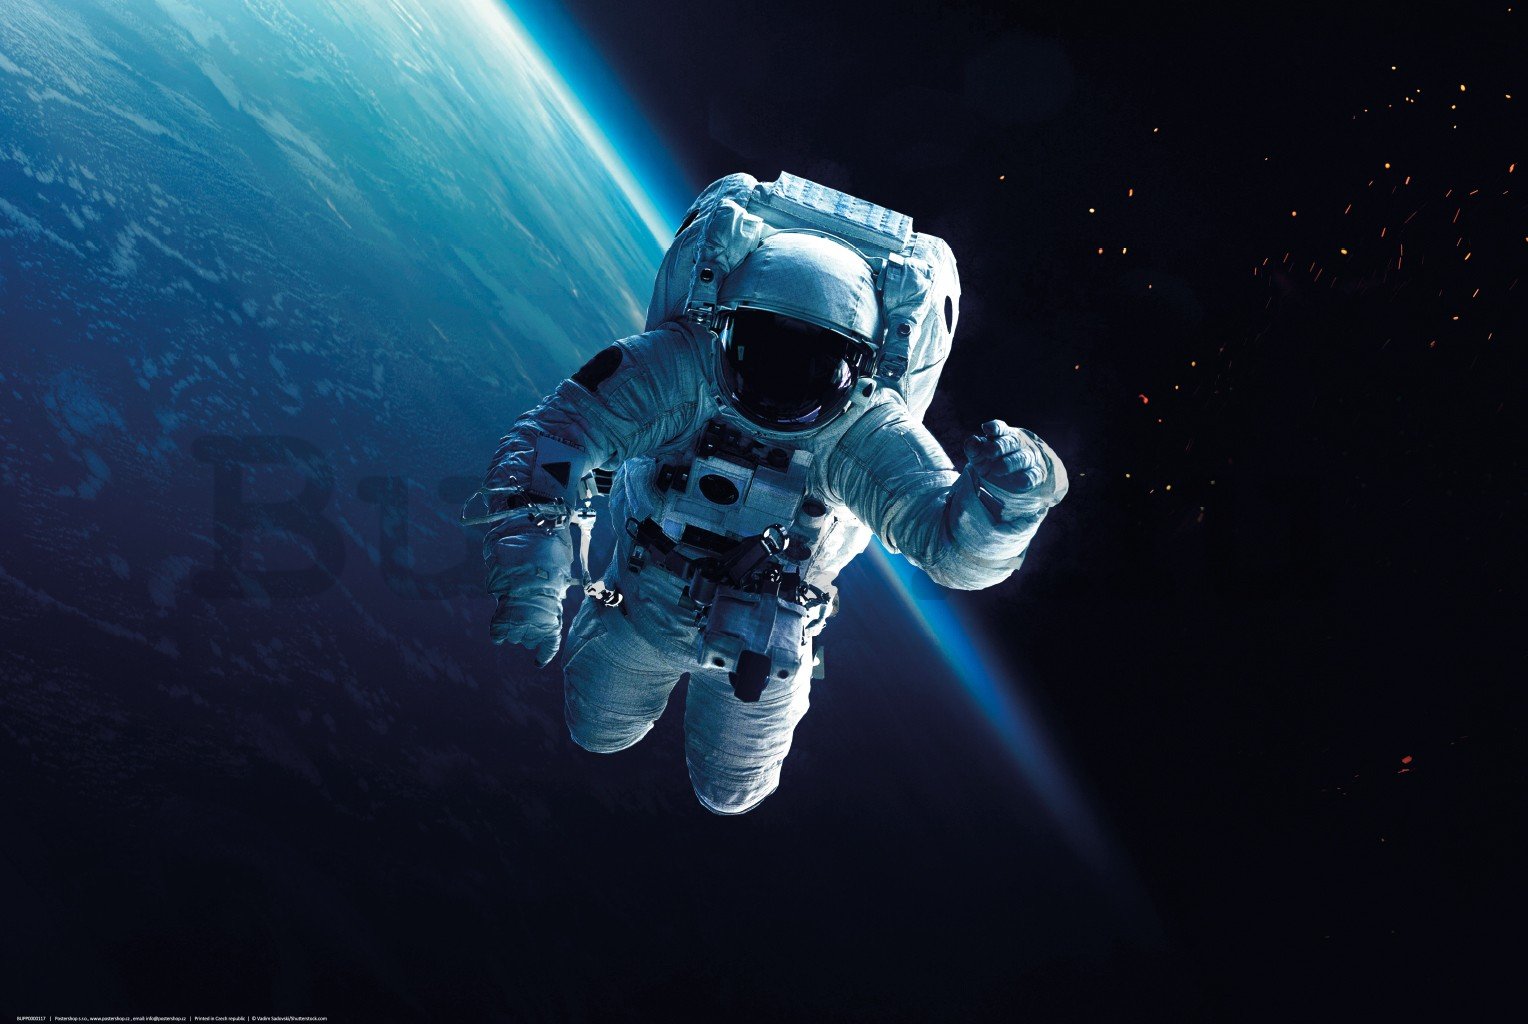 Poster: Űrhajós az űrben